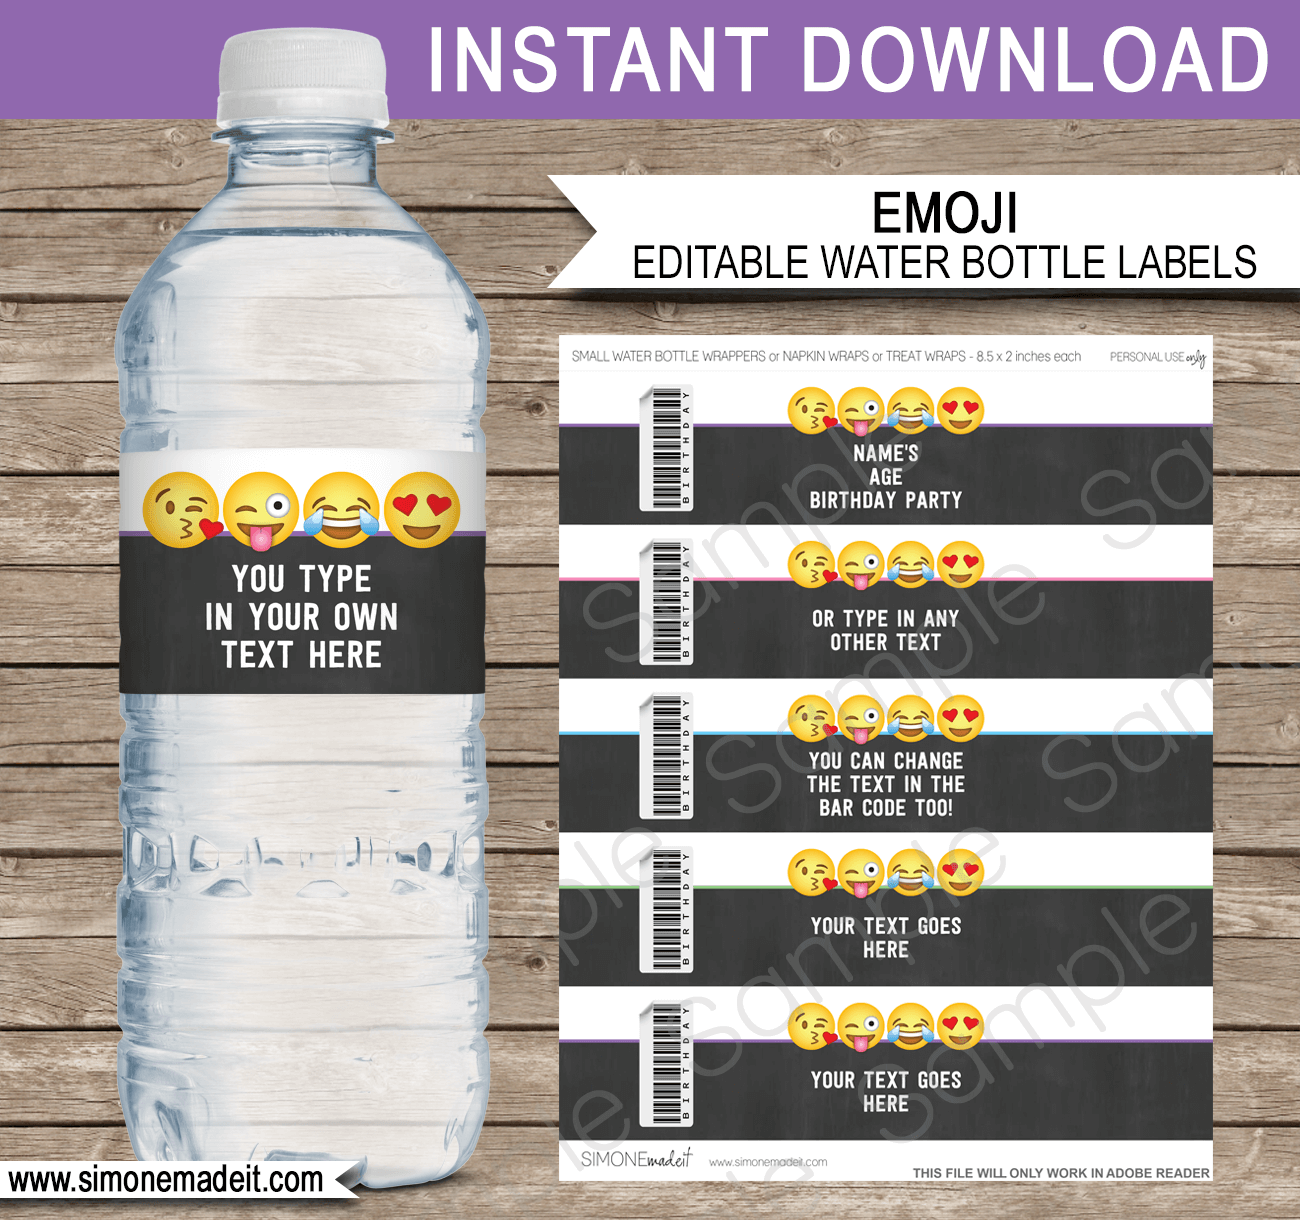 Emoji Water Bottle Labels template | Emoji Theme Birthday Party | Napkin Wraps | Treat Wraps | DIY Editable Template | INSTANT DOWNLOAD via simonemadeit.com